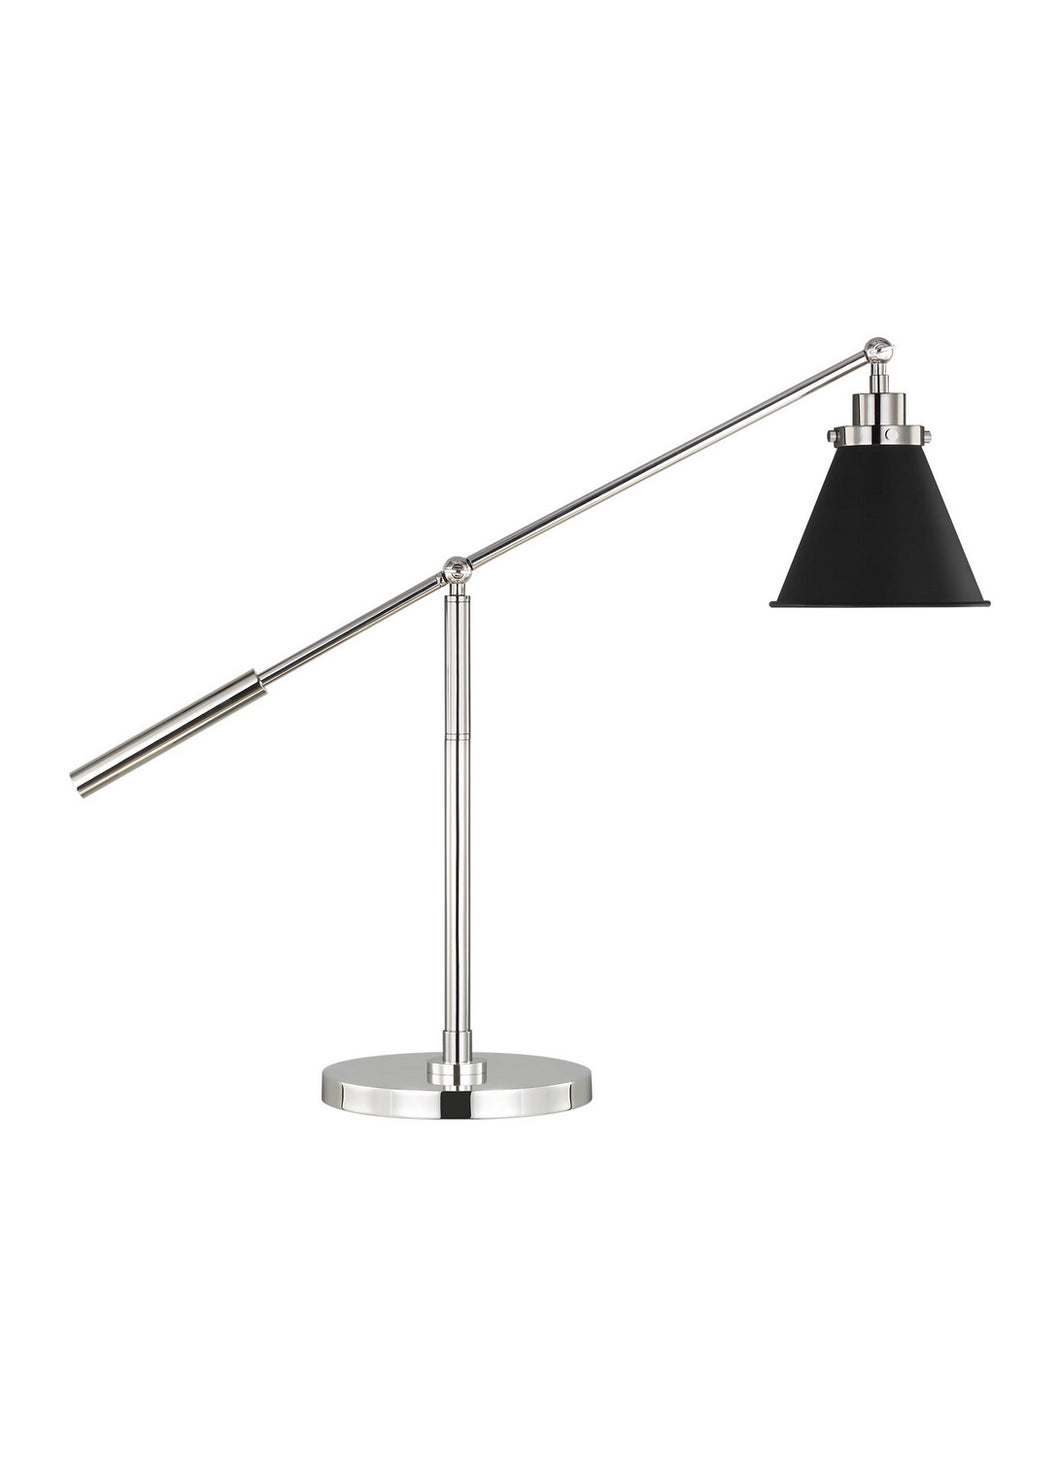 Generation Lighting - CT1091MBKPN1 - One Light Desk Lamp - WELLFLEET